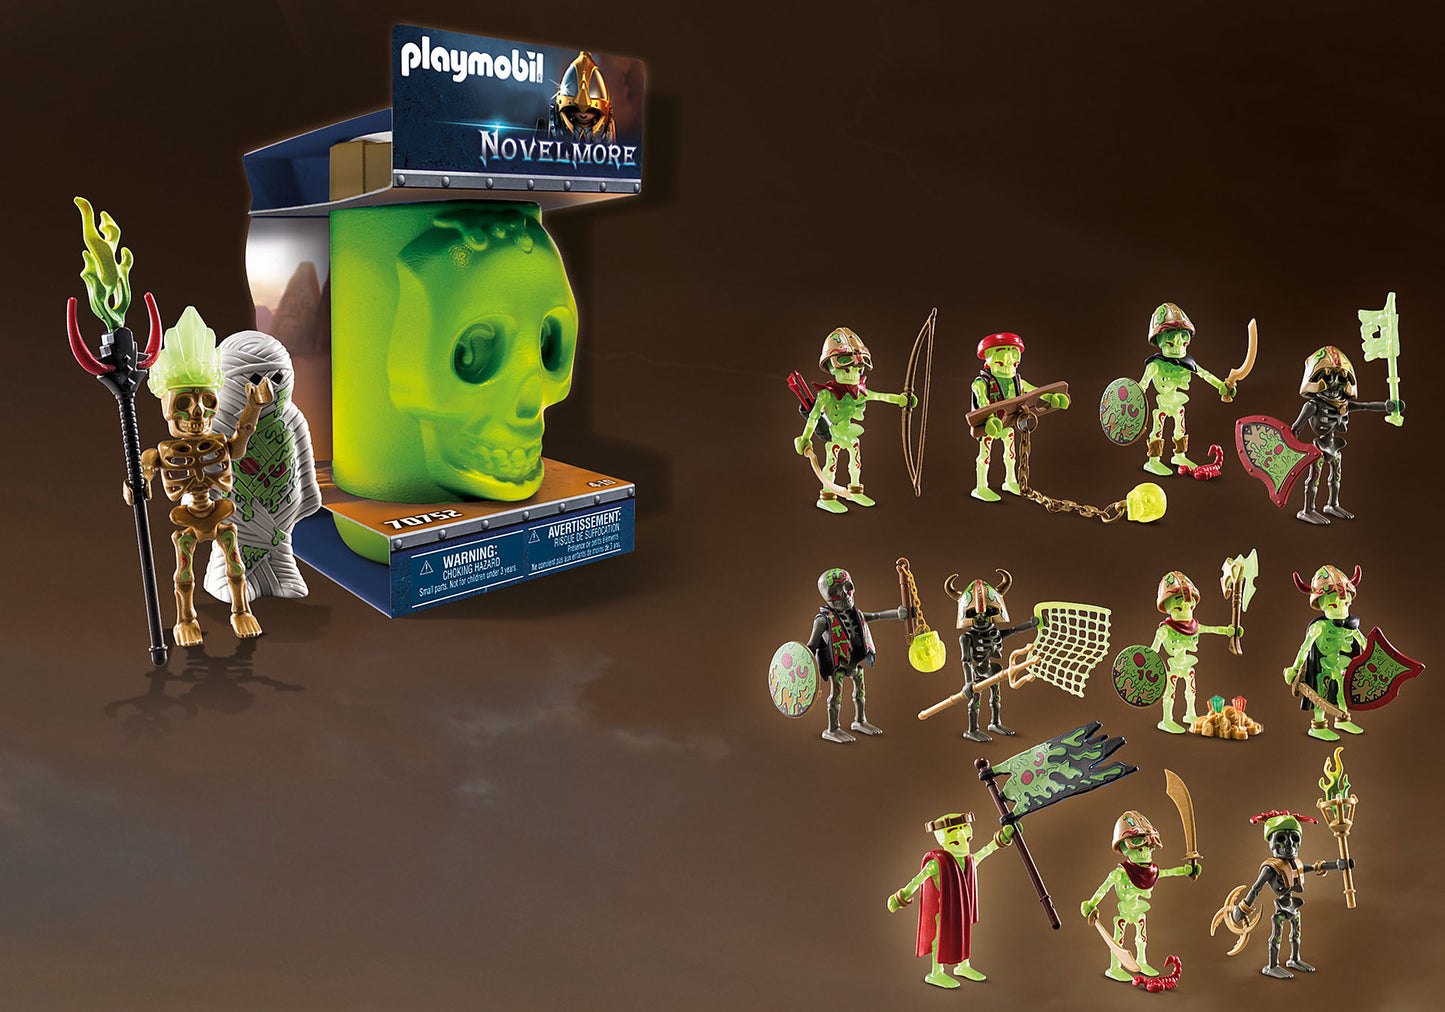 Playmobil: Novelmore III - Skeleton Surprise Box